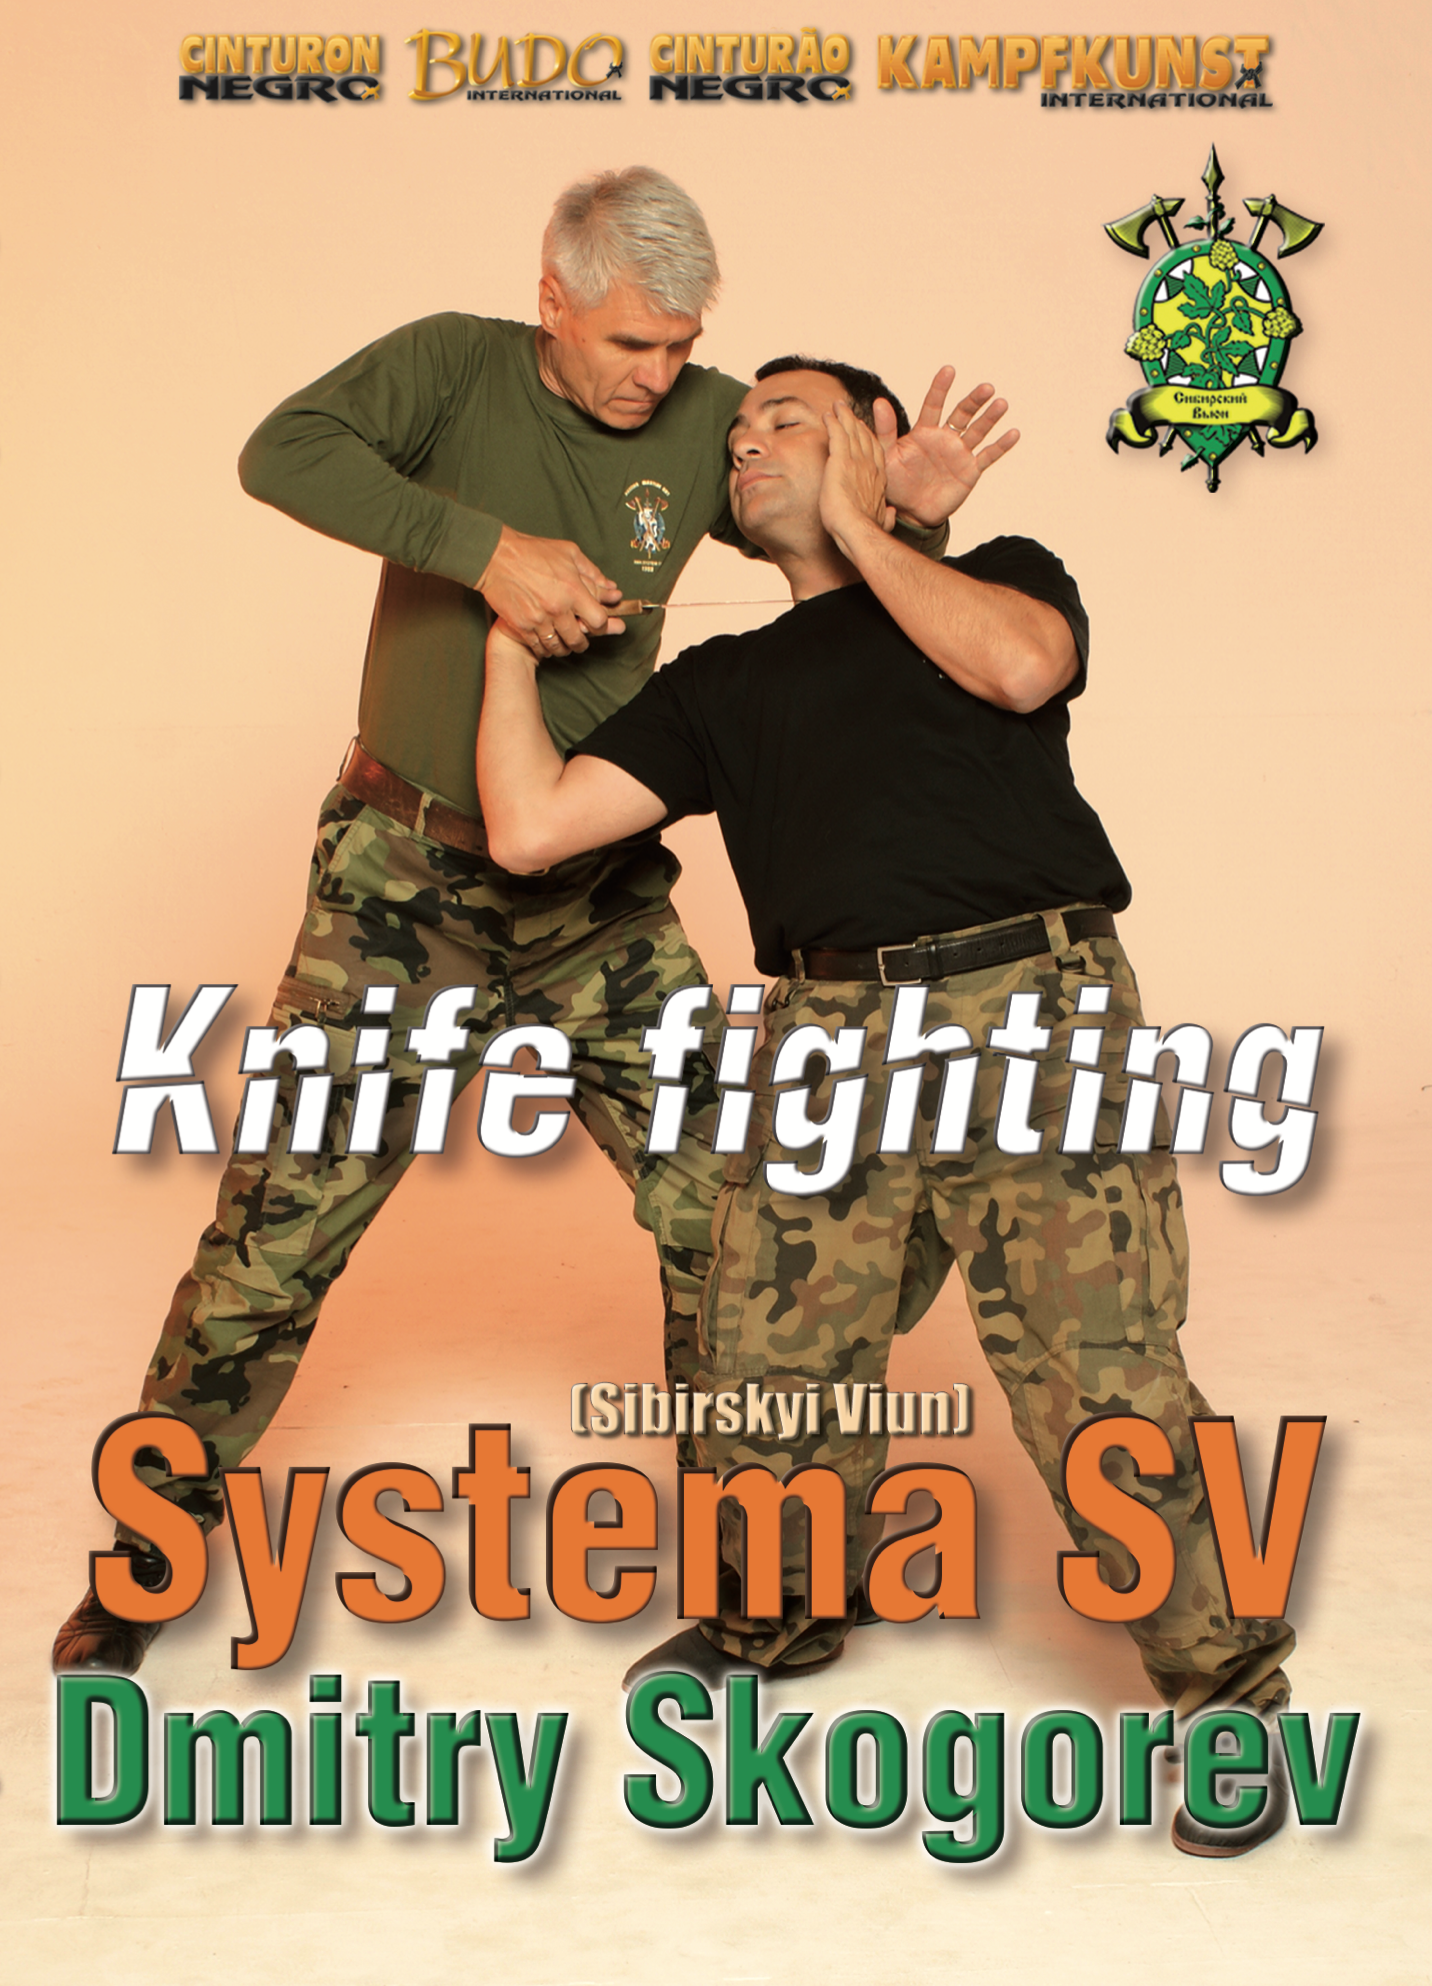 RMA Systema SV Knife Fighting 1 DVD with Dmitry Skogorev